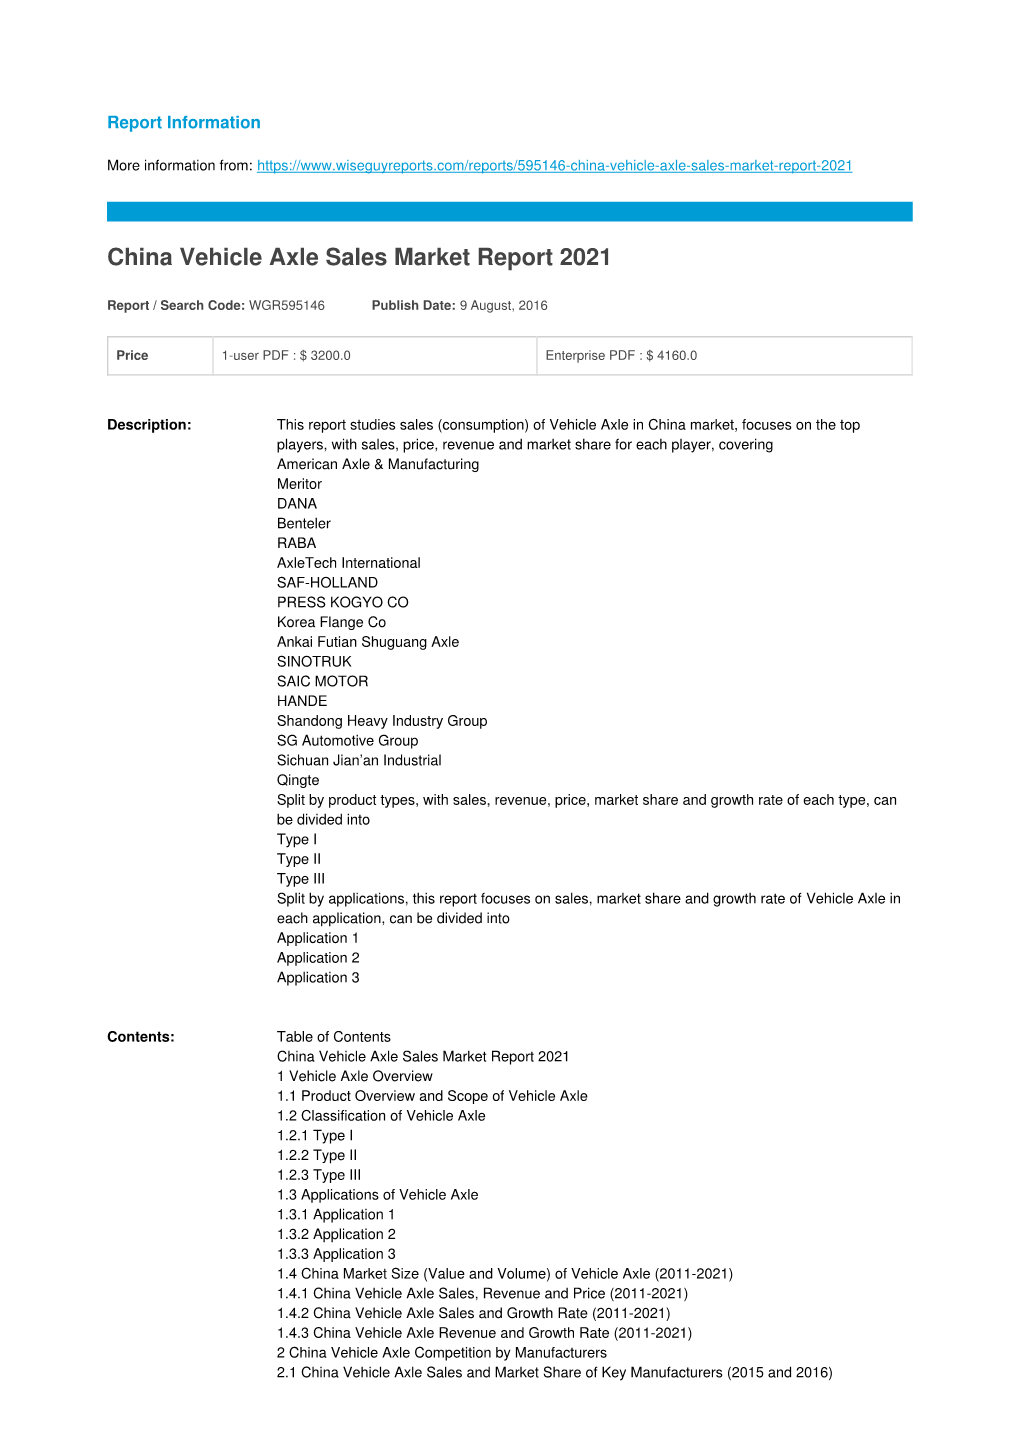 China Vehicle Axle Sales Market Report 2021